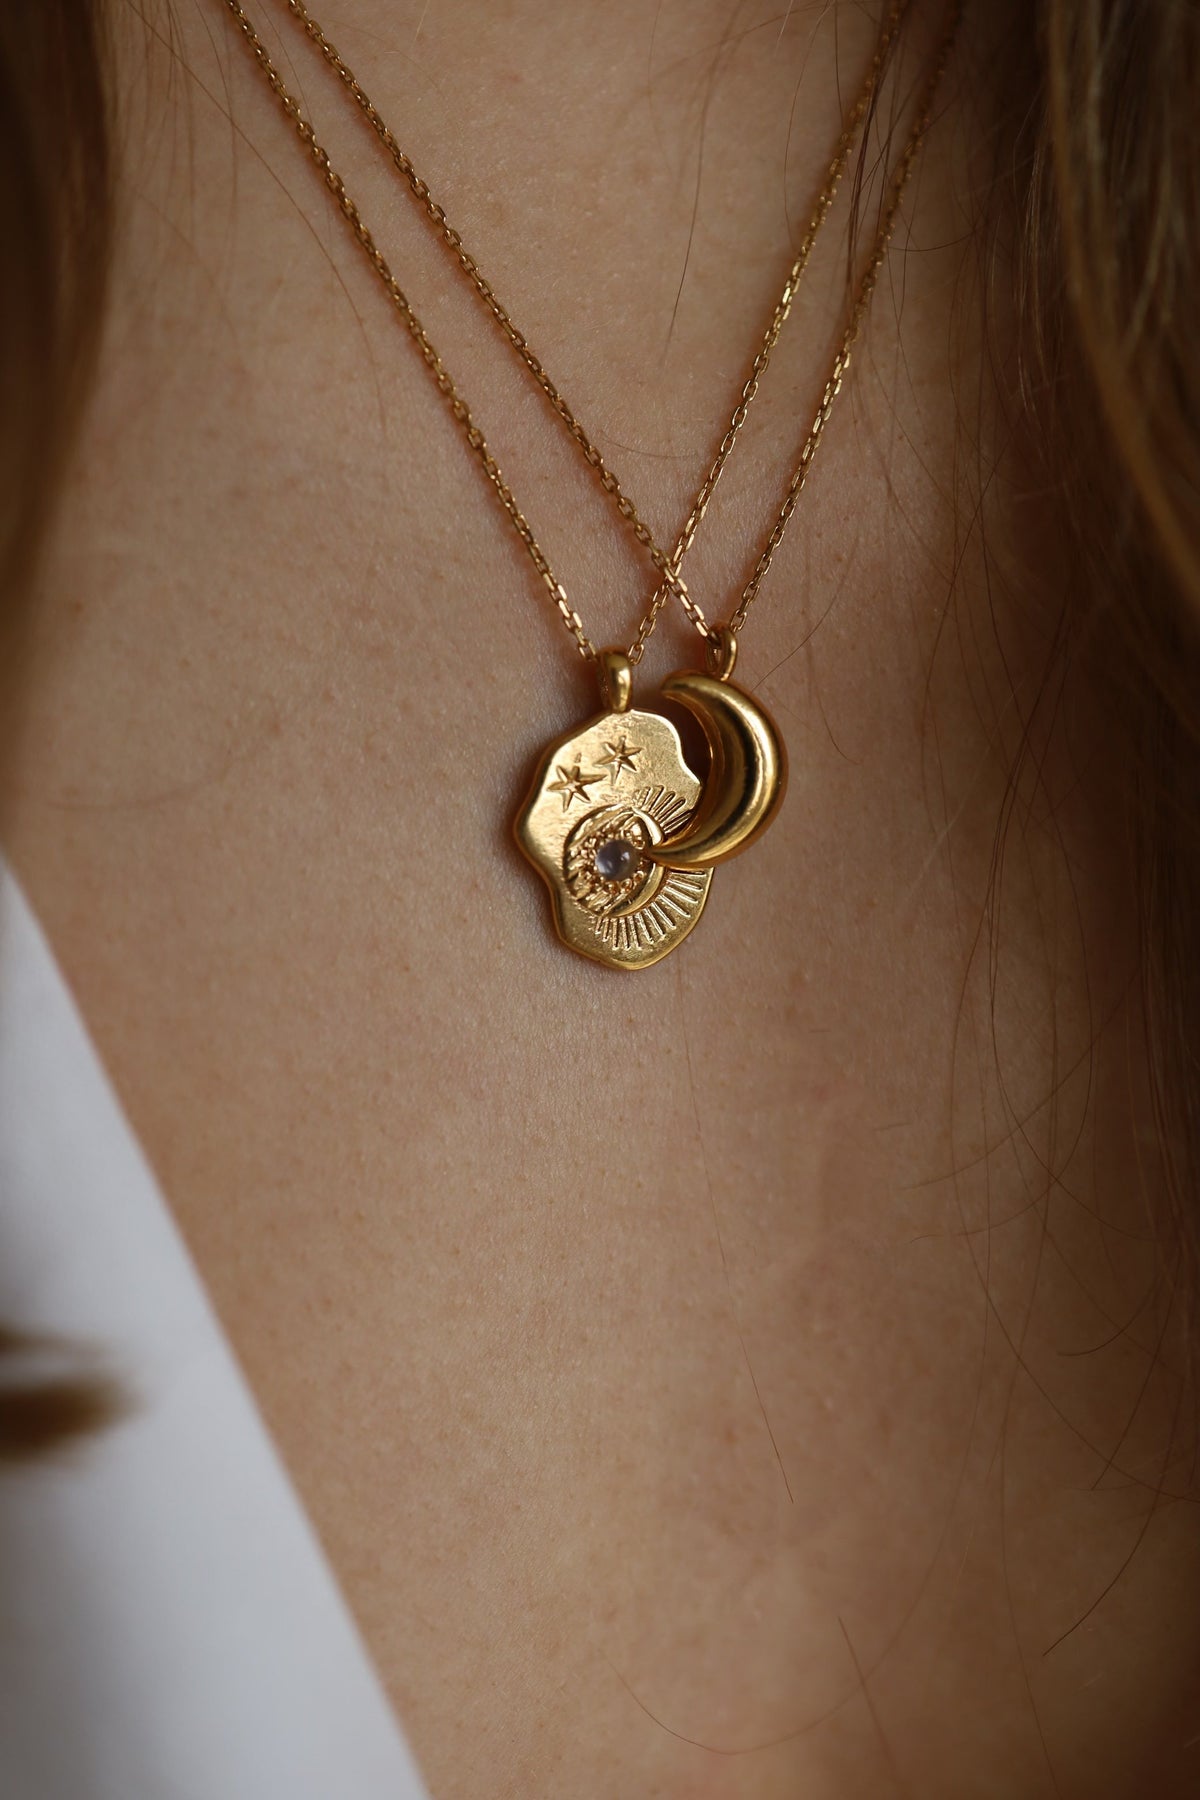 LUNA necklace with a moon pendant | Luks x Mellov